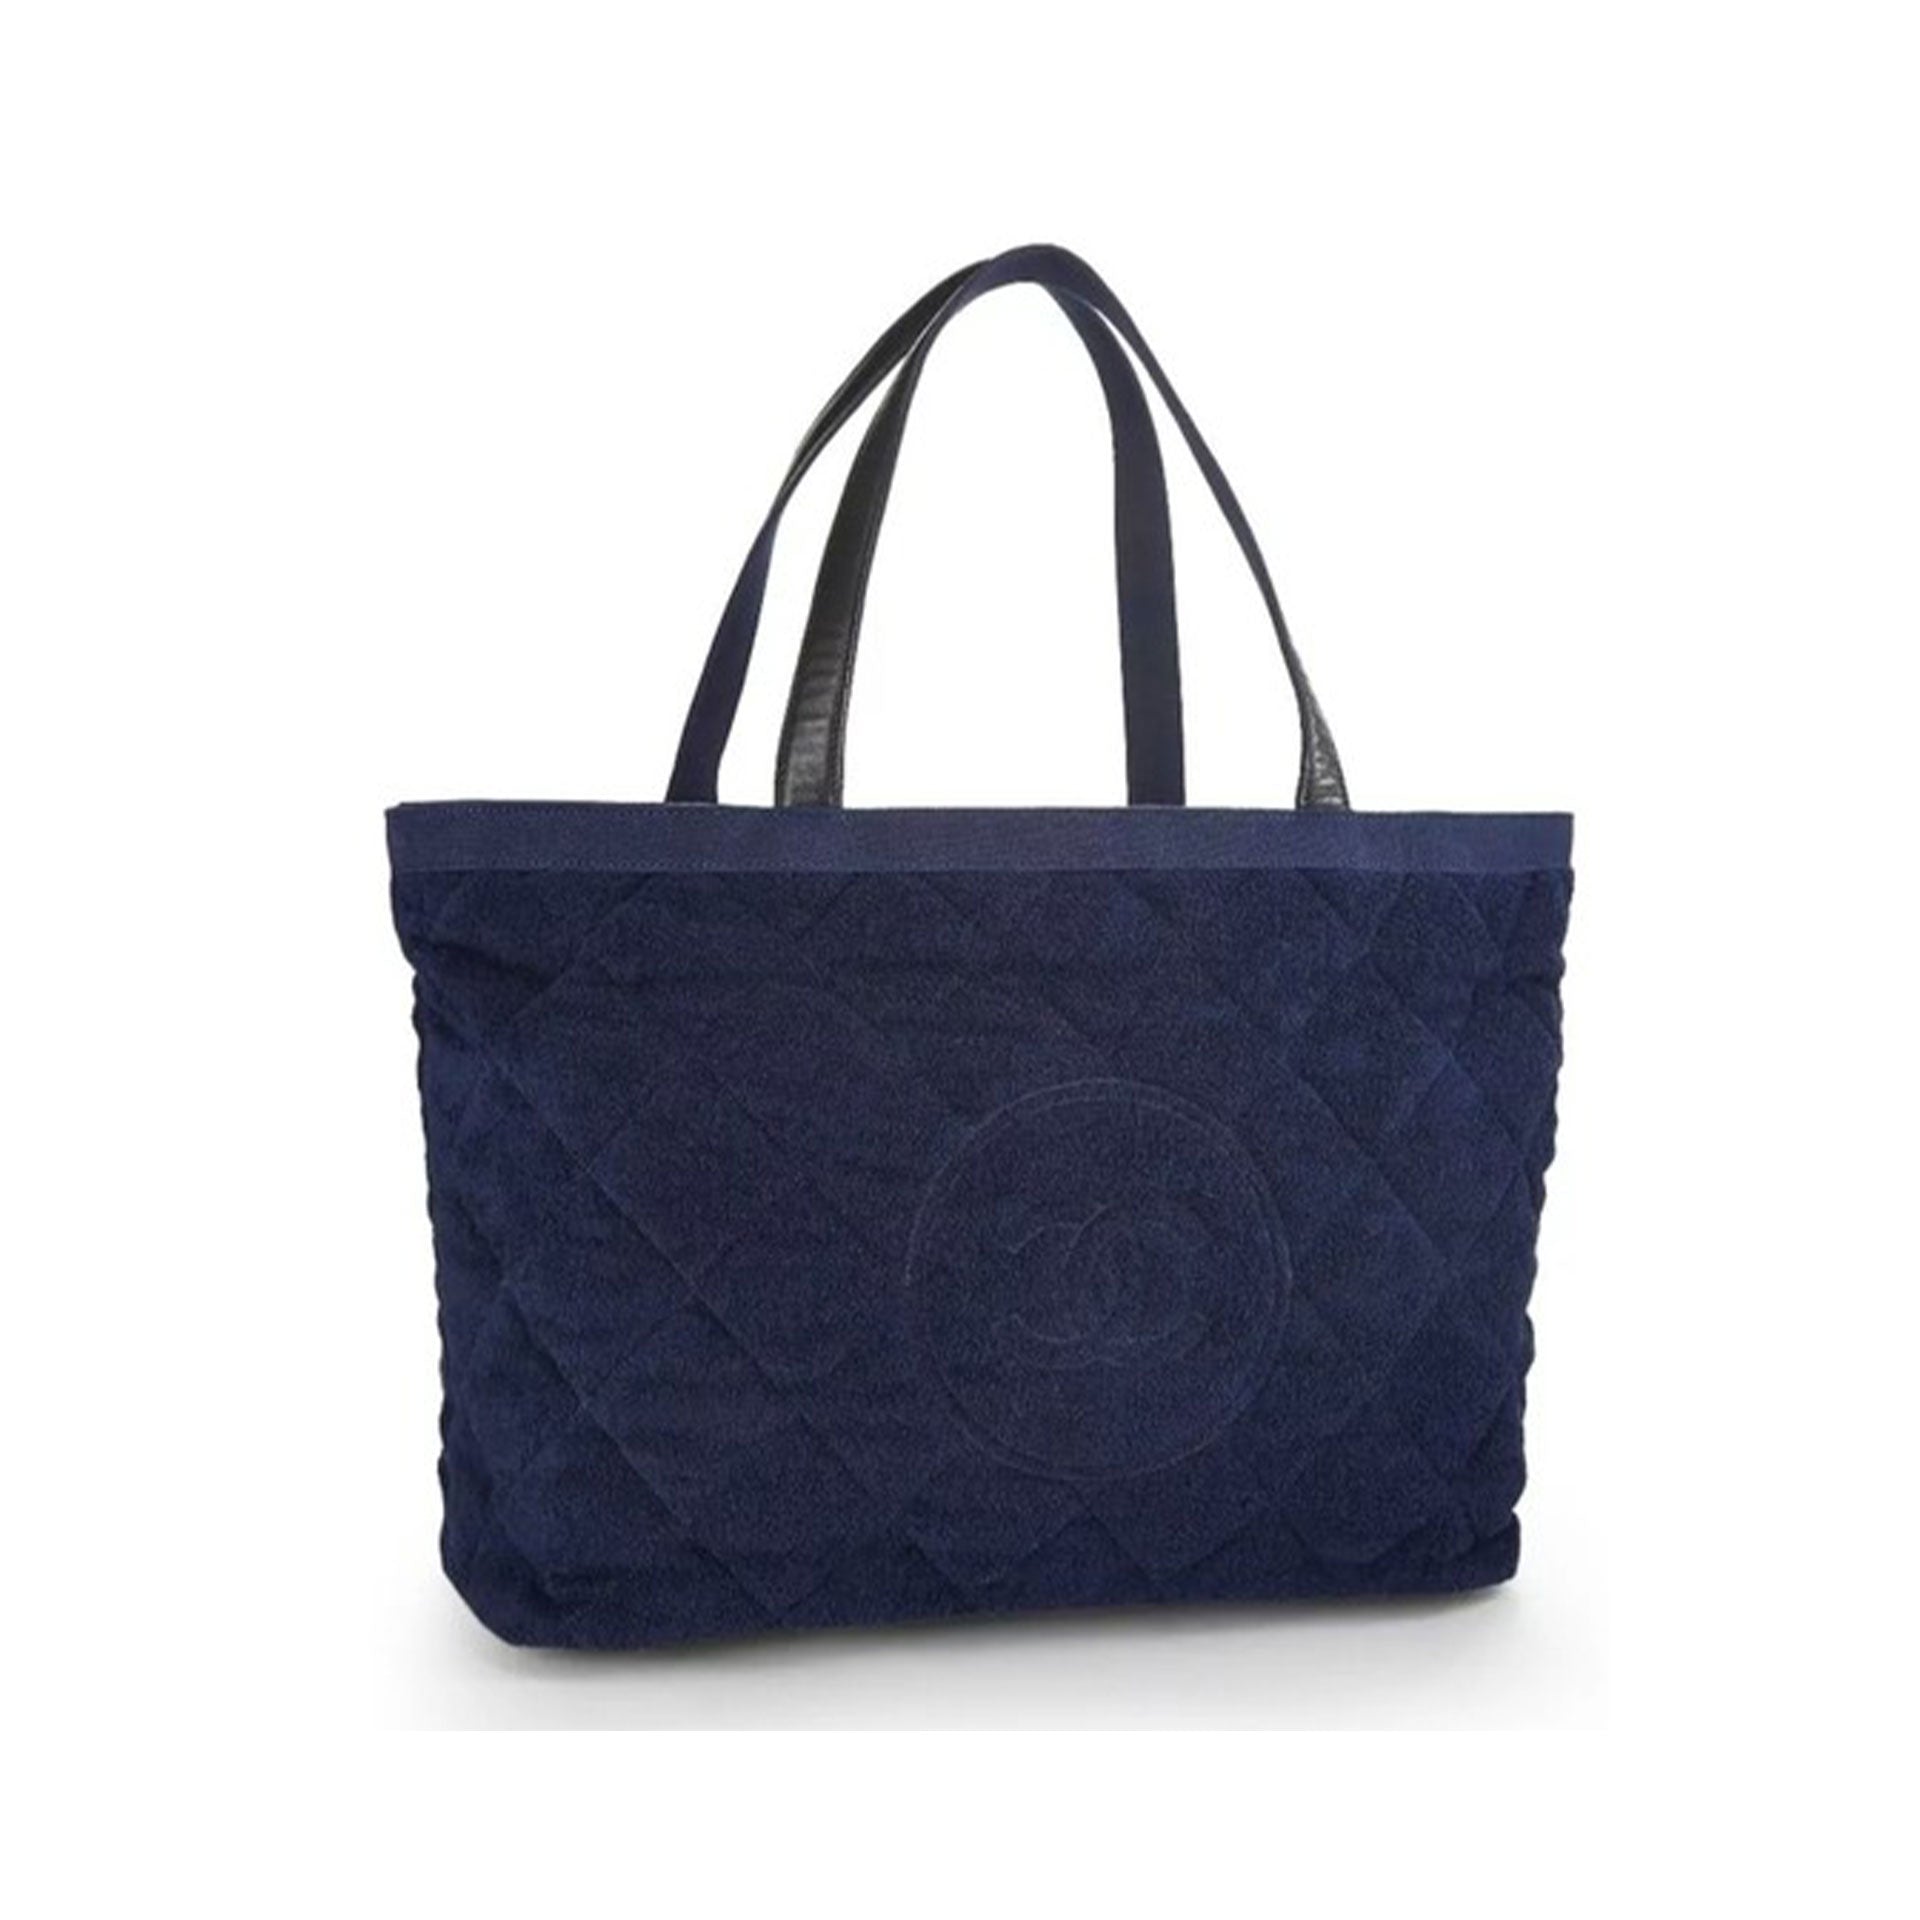 Chanel Timeless Tote XL Navy Blue Beach Bag